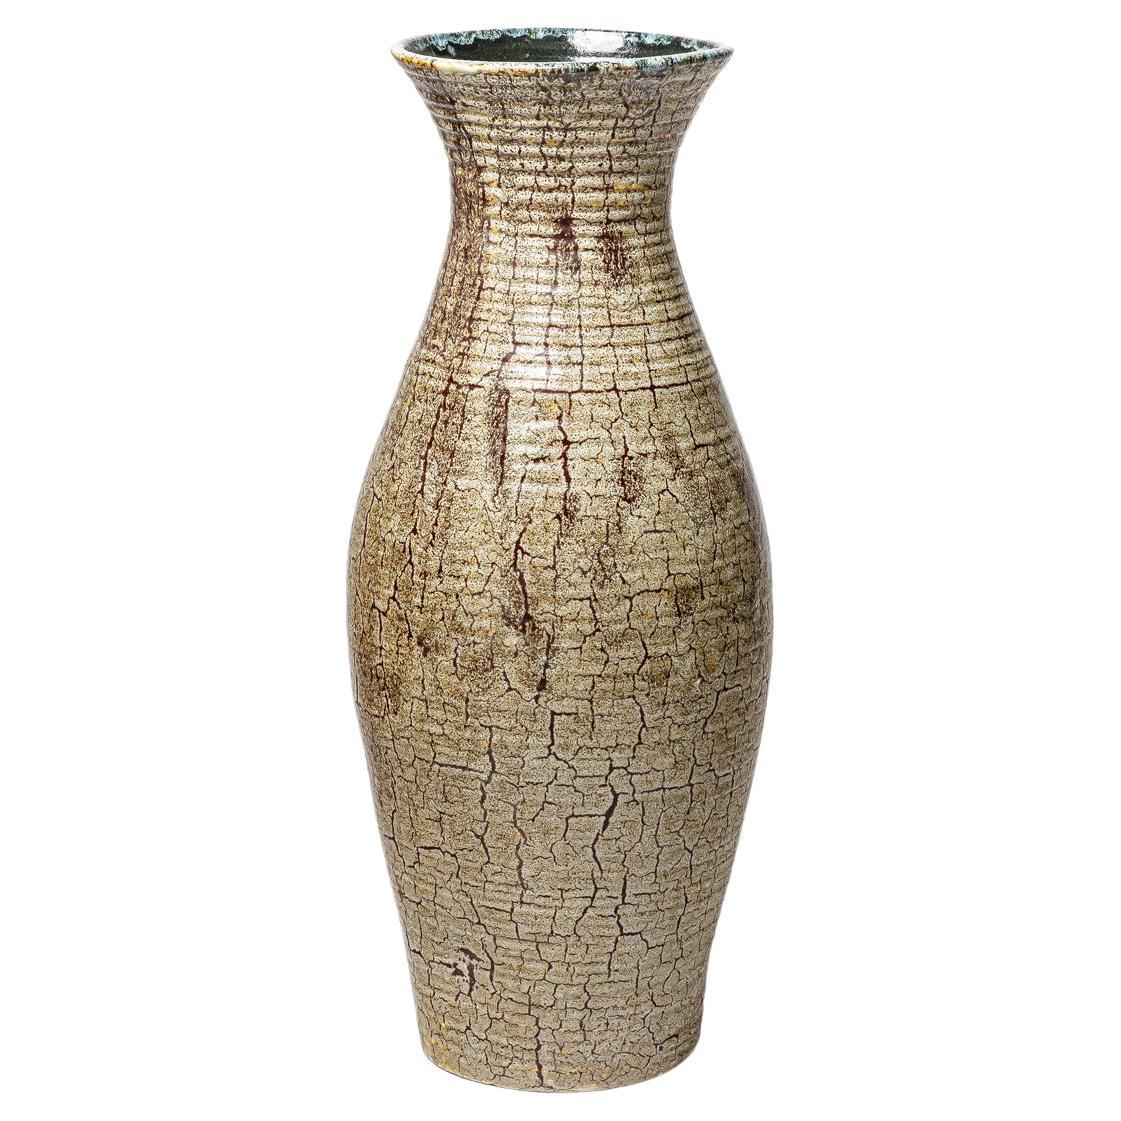  Brown glazed stoneware vase by Accolay, circa 1960-1970.